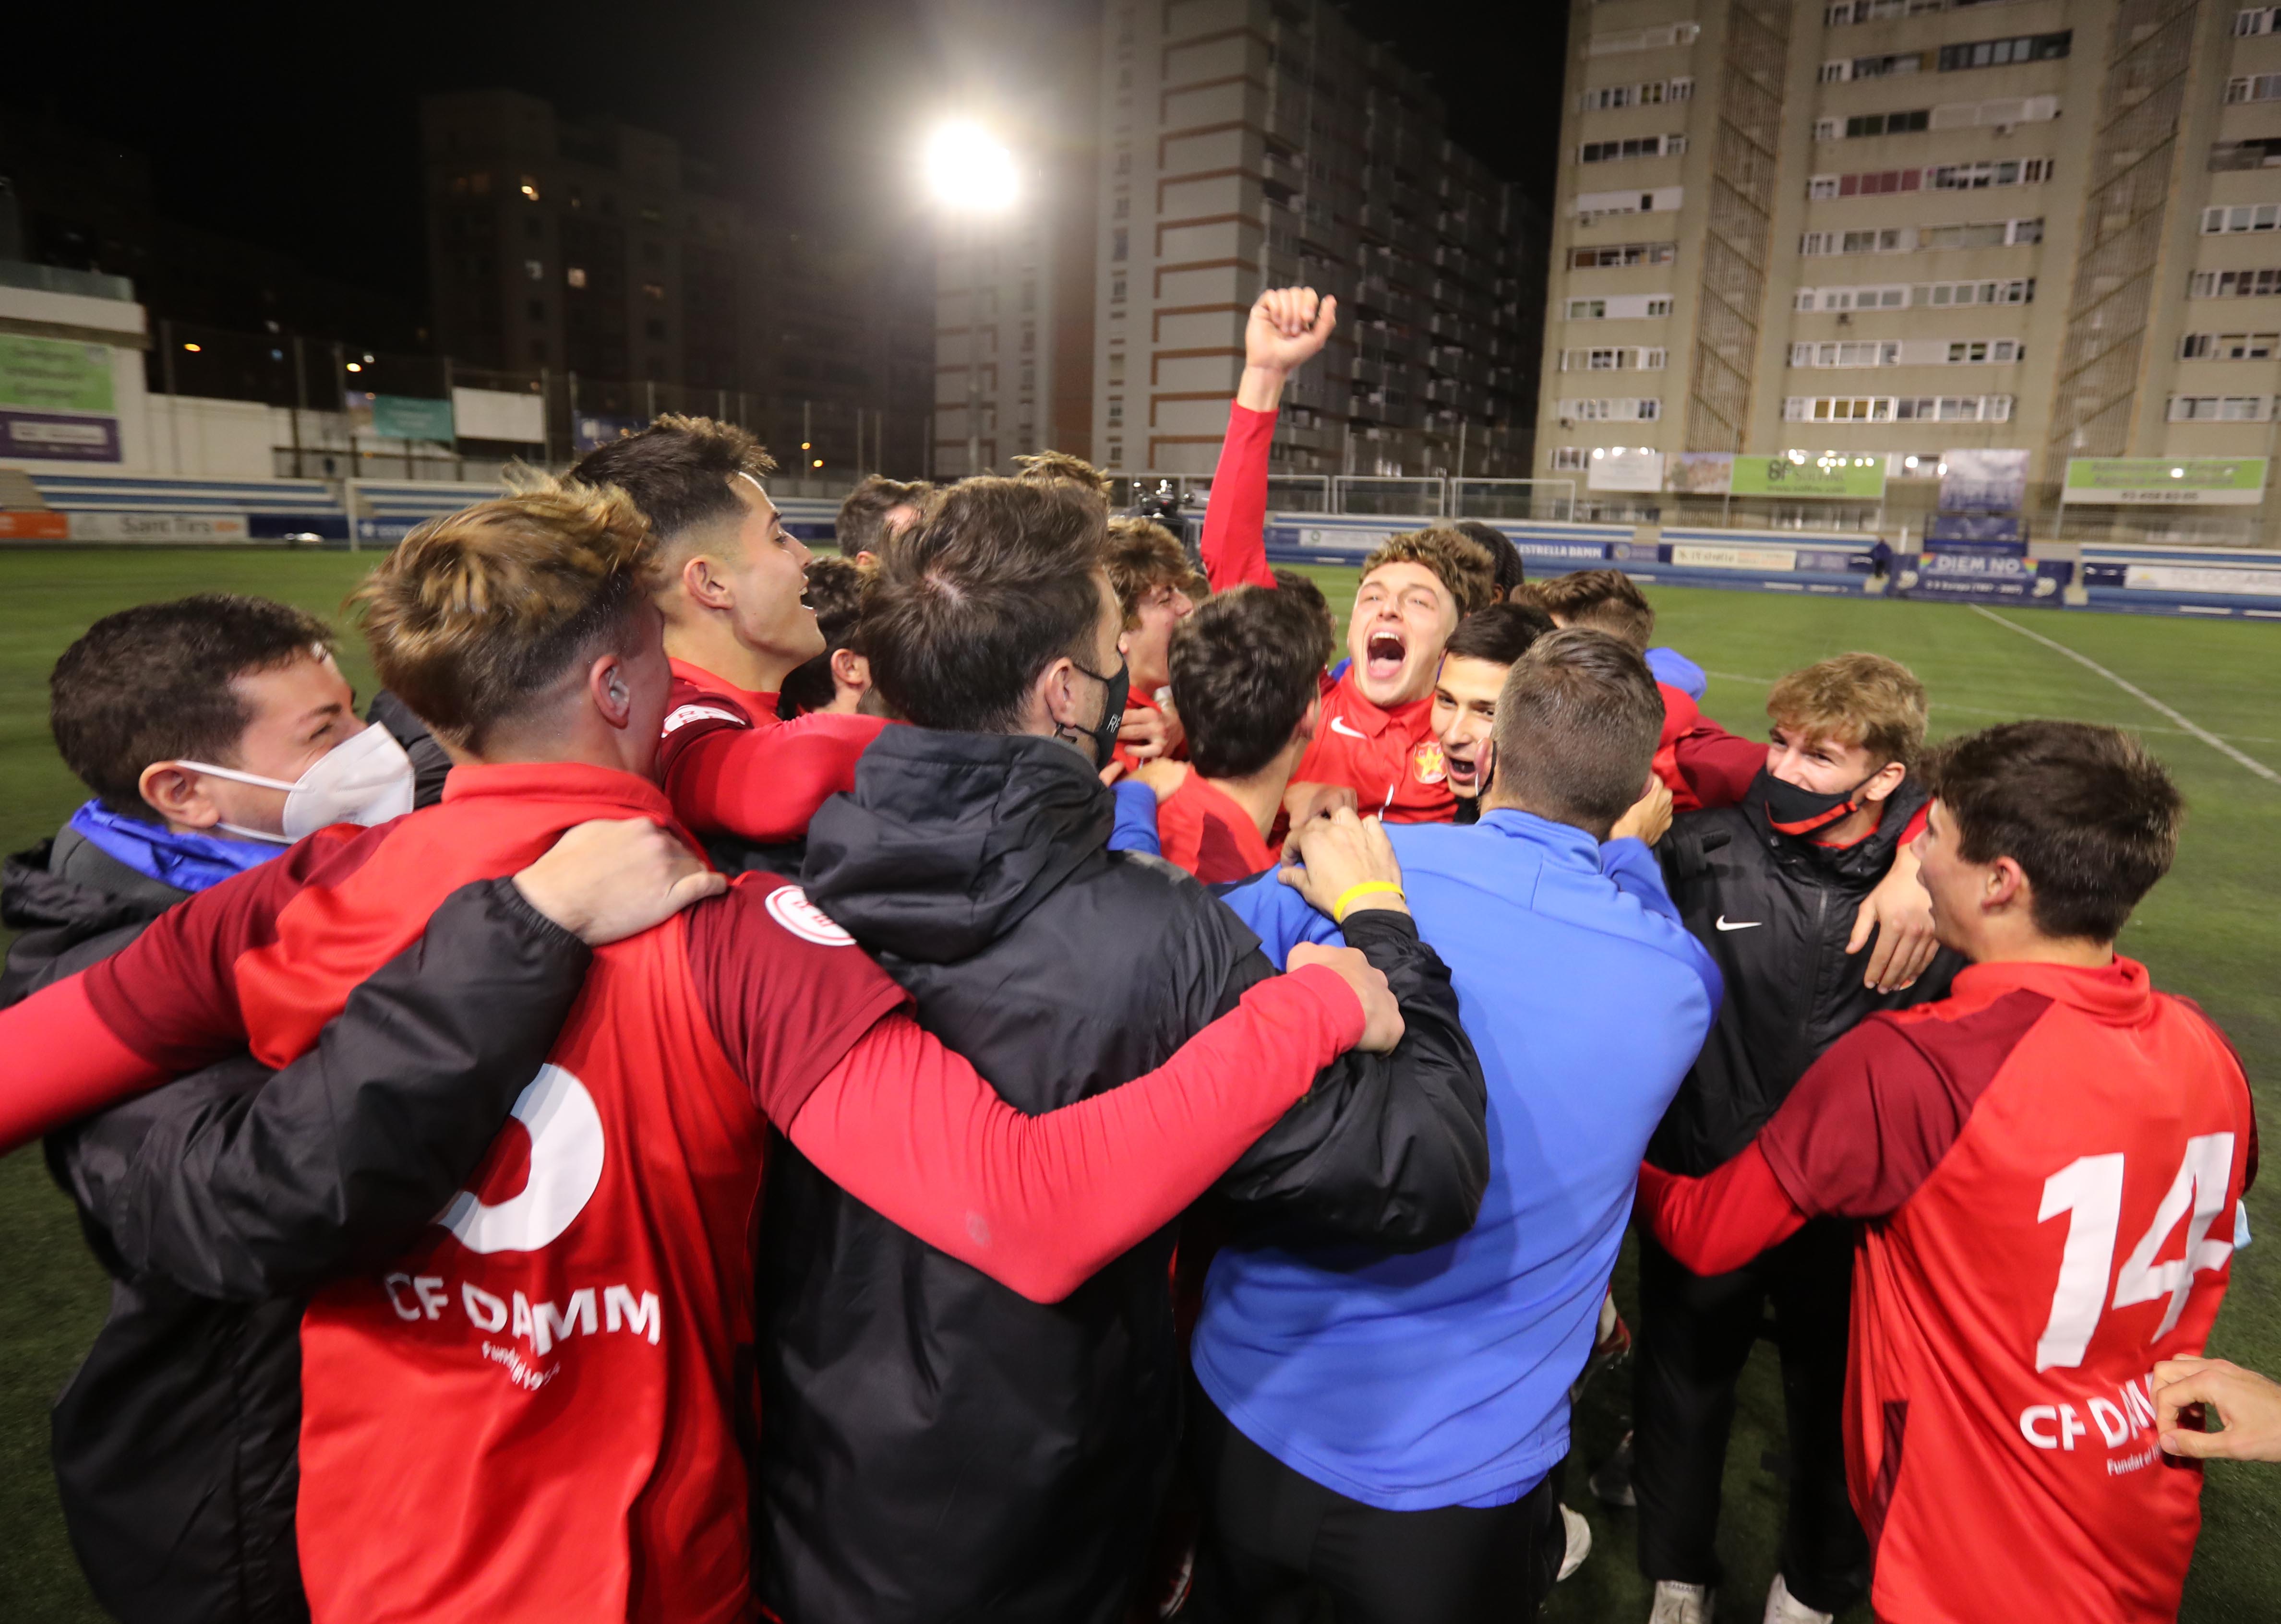 El Club de Futbol Damm se clasifica para la Copa del Rey Juvenil